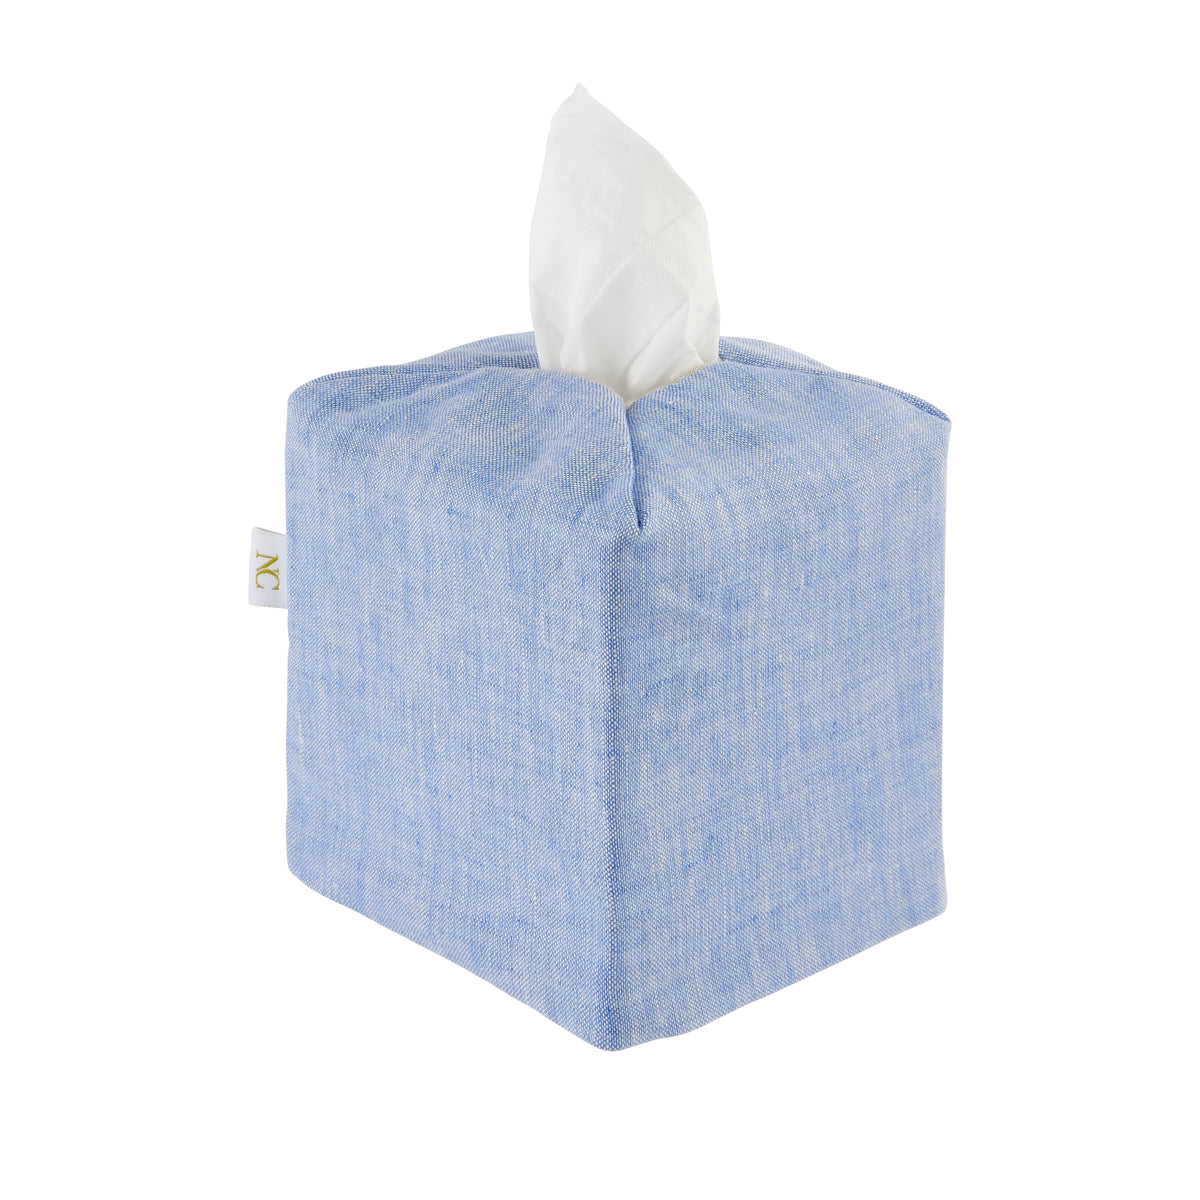 Tissue Box Cover Blue & Grey